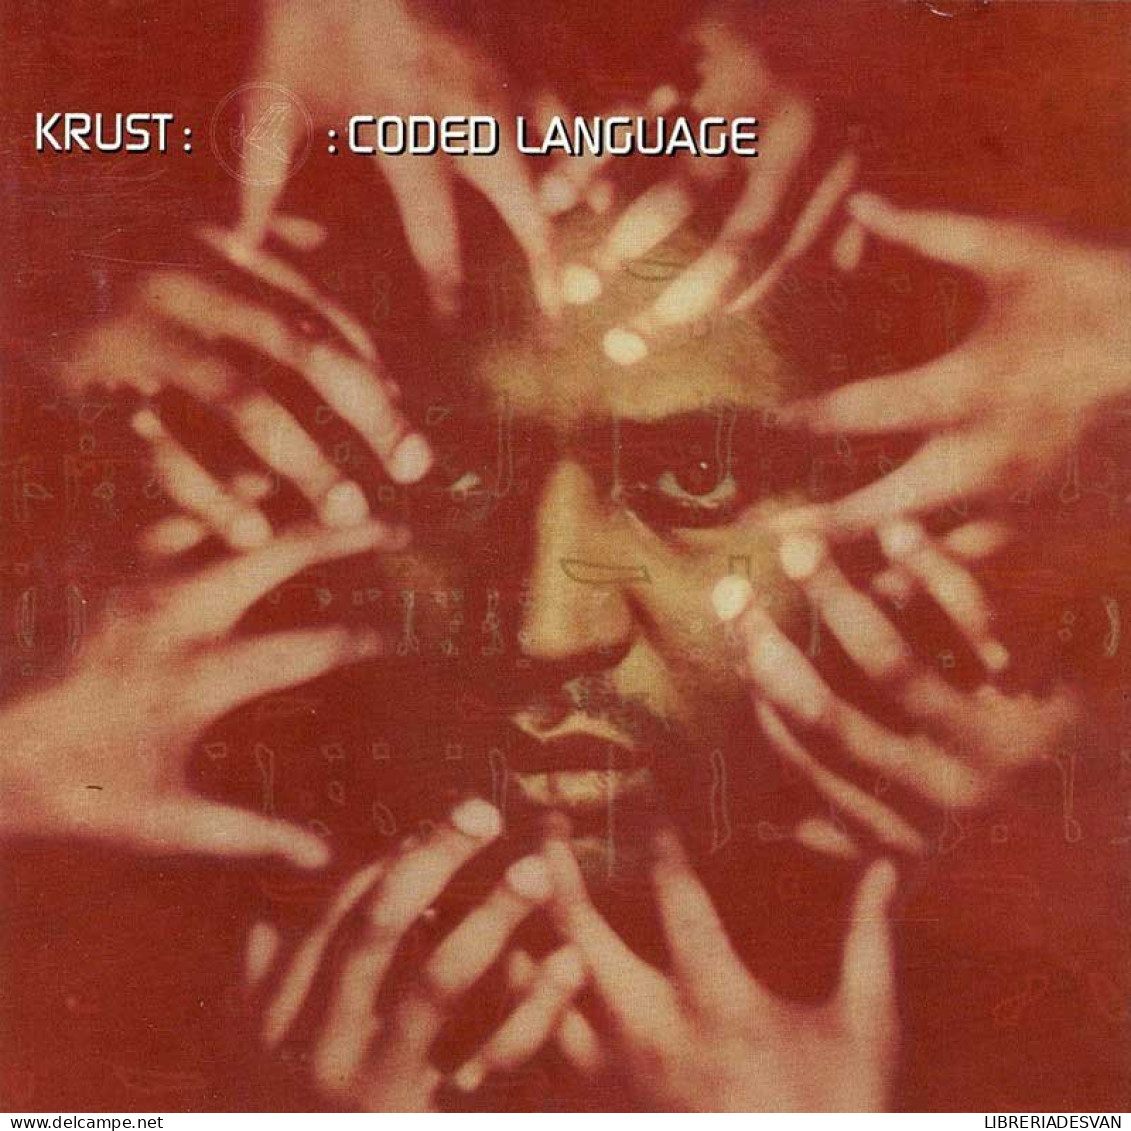 Krust - Coded Language. CD - Dance, Techno & House